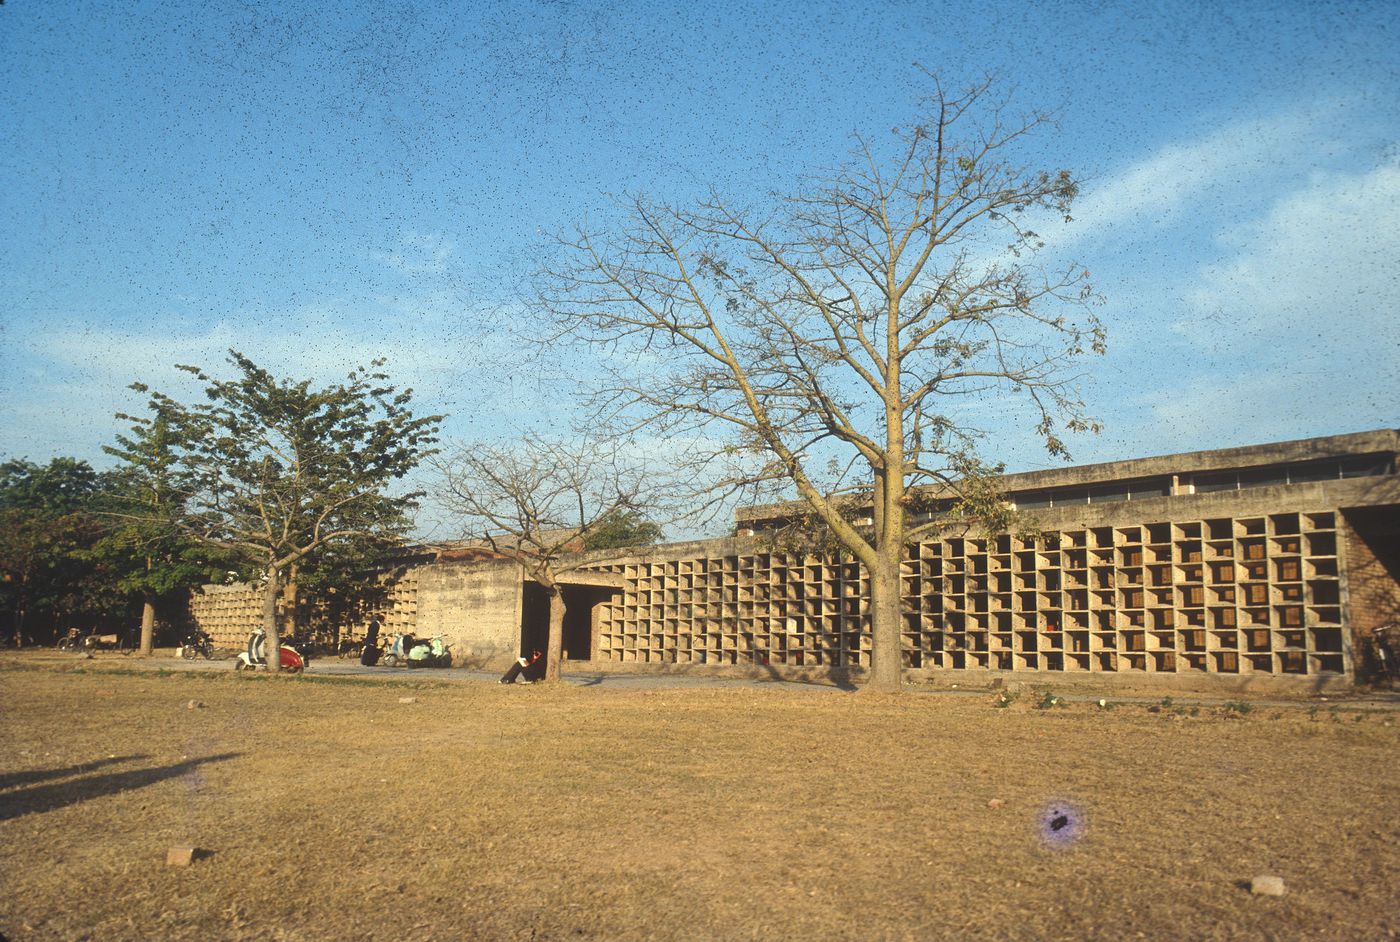 Slide of Chandigarh College of Architecture, Chandigarh, India